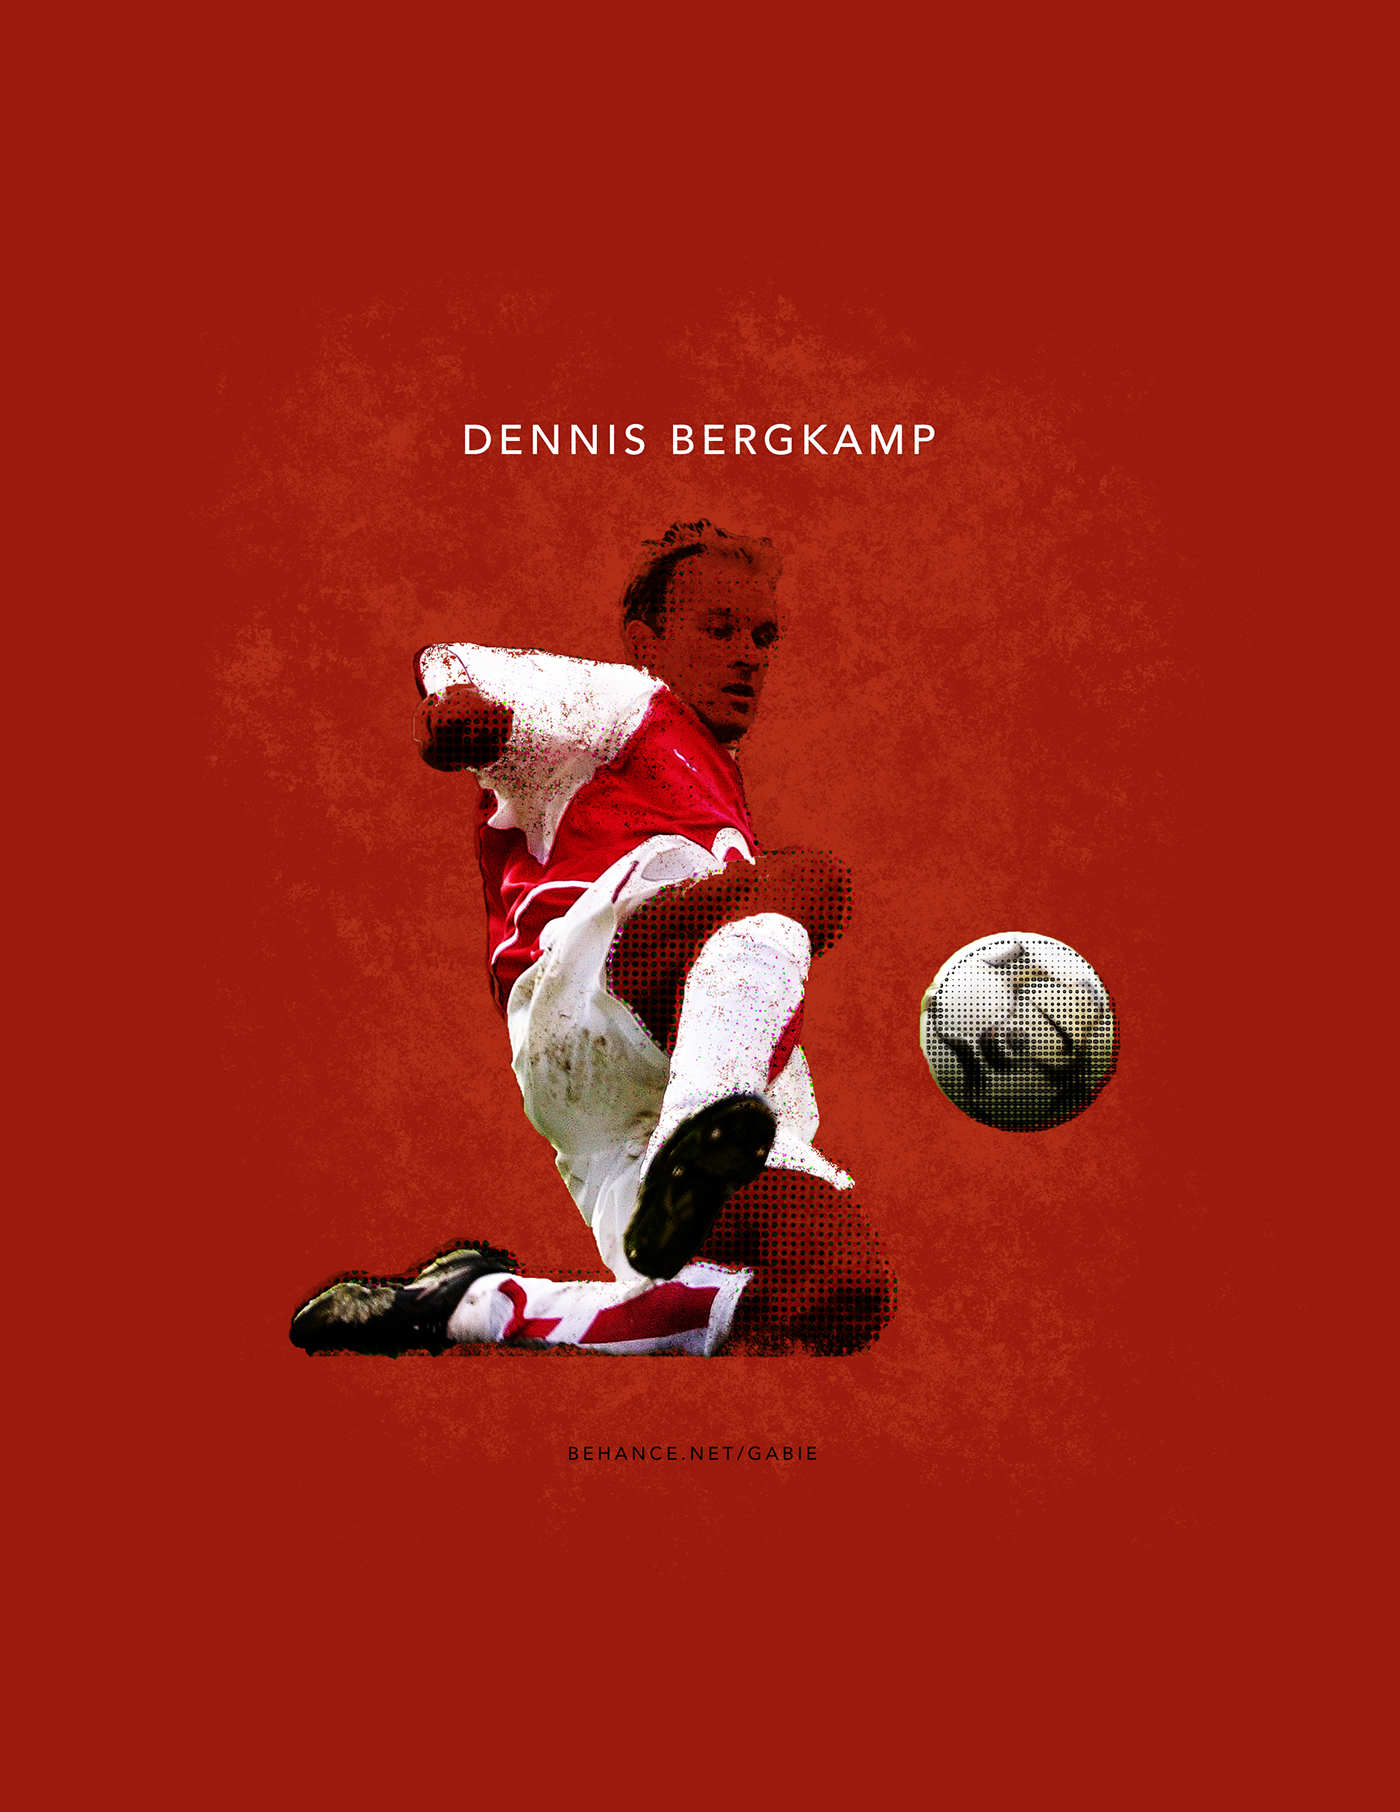 arsenal football soccer thierry henry bergkamp dennis robert pires graphics red